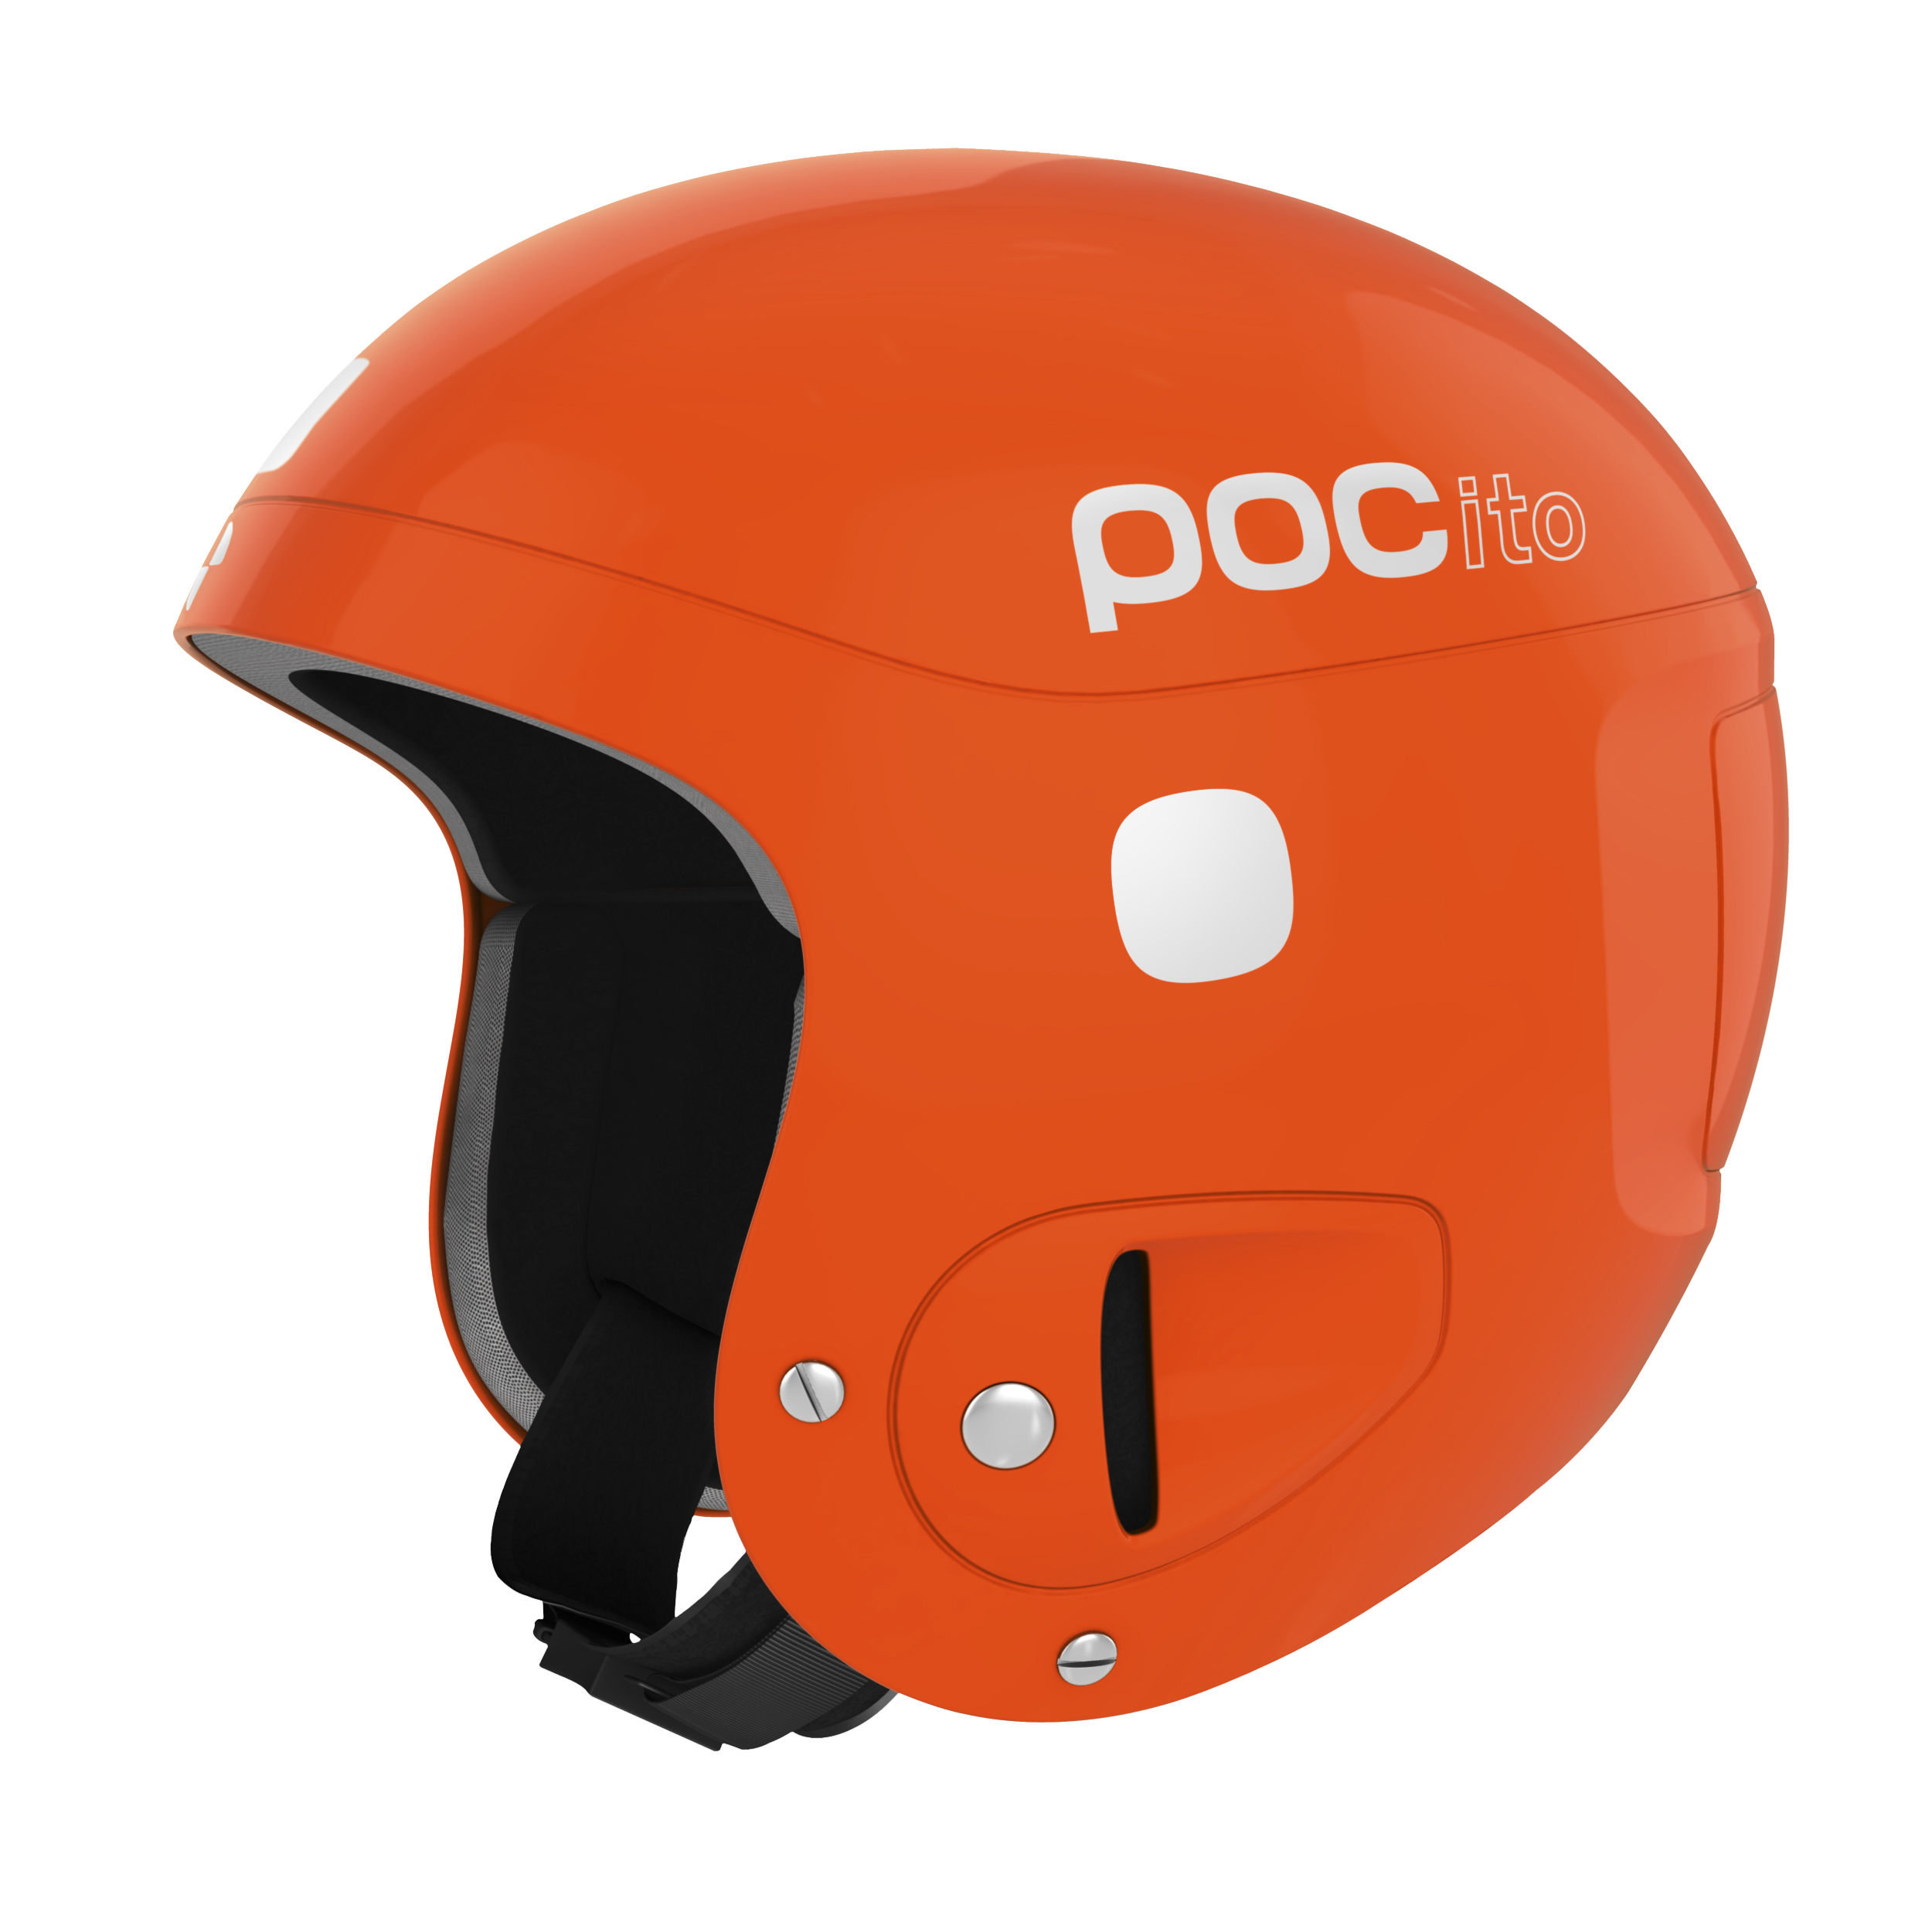 POC helma POCito Skull Fluorescent Orange Velikost: XS-S (51-54)